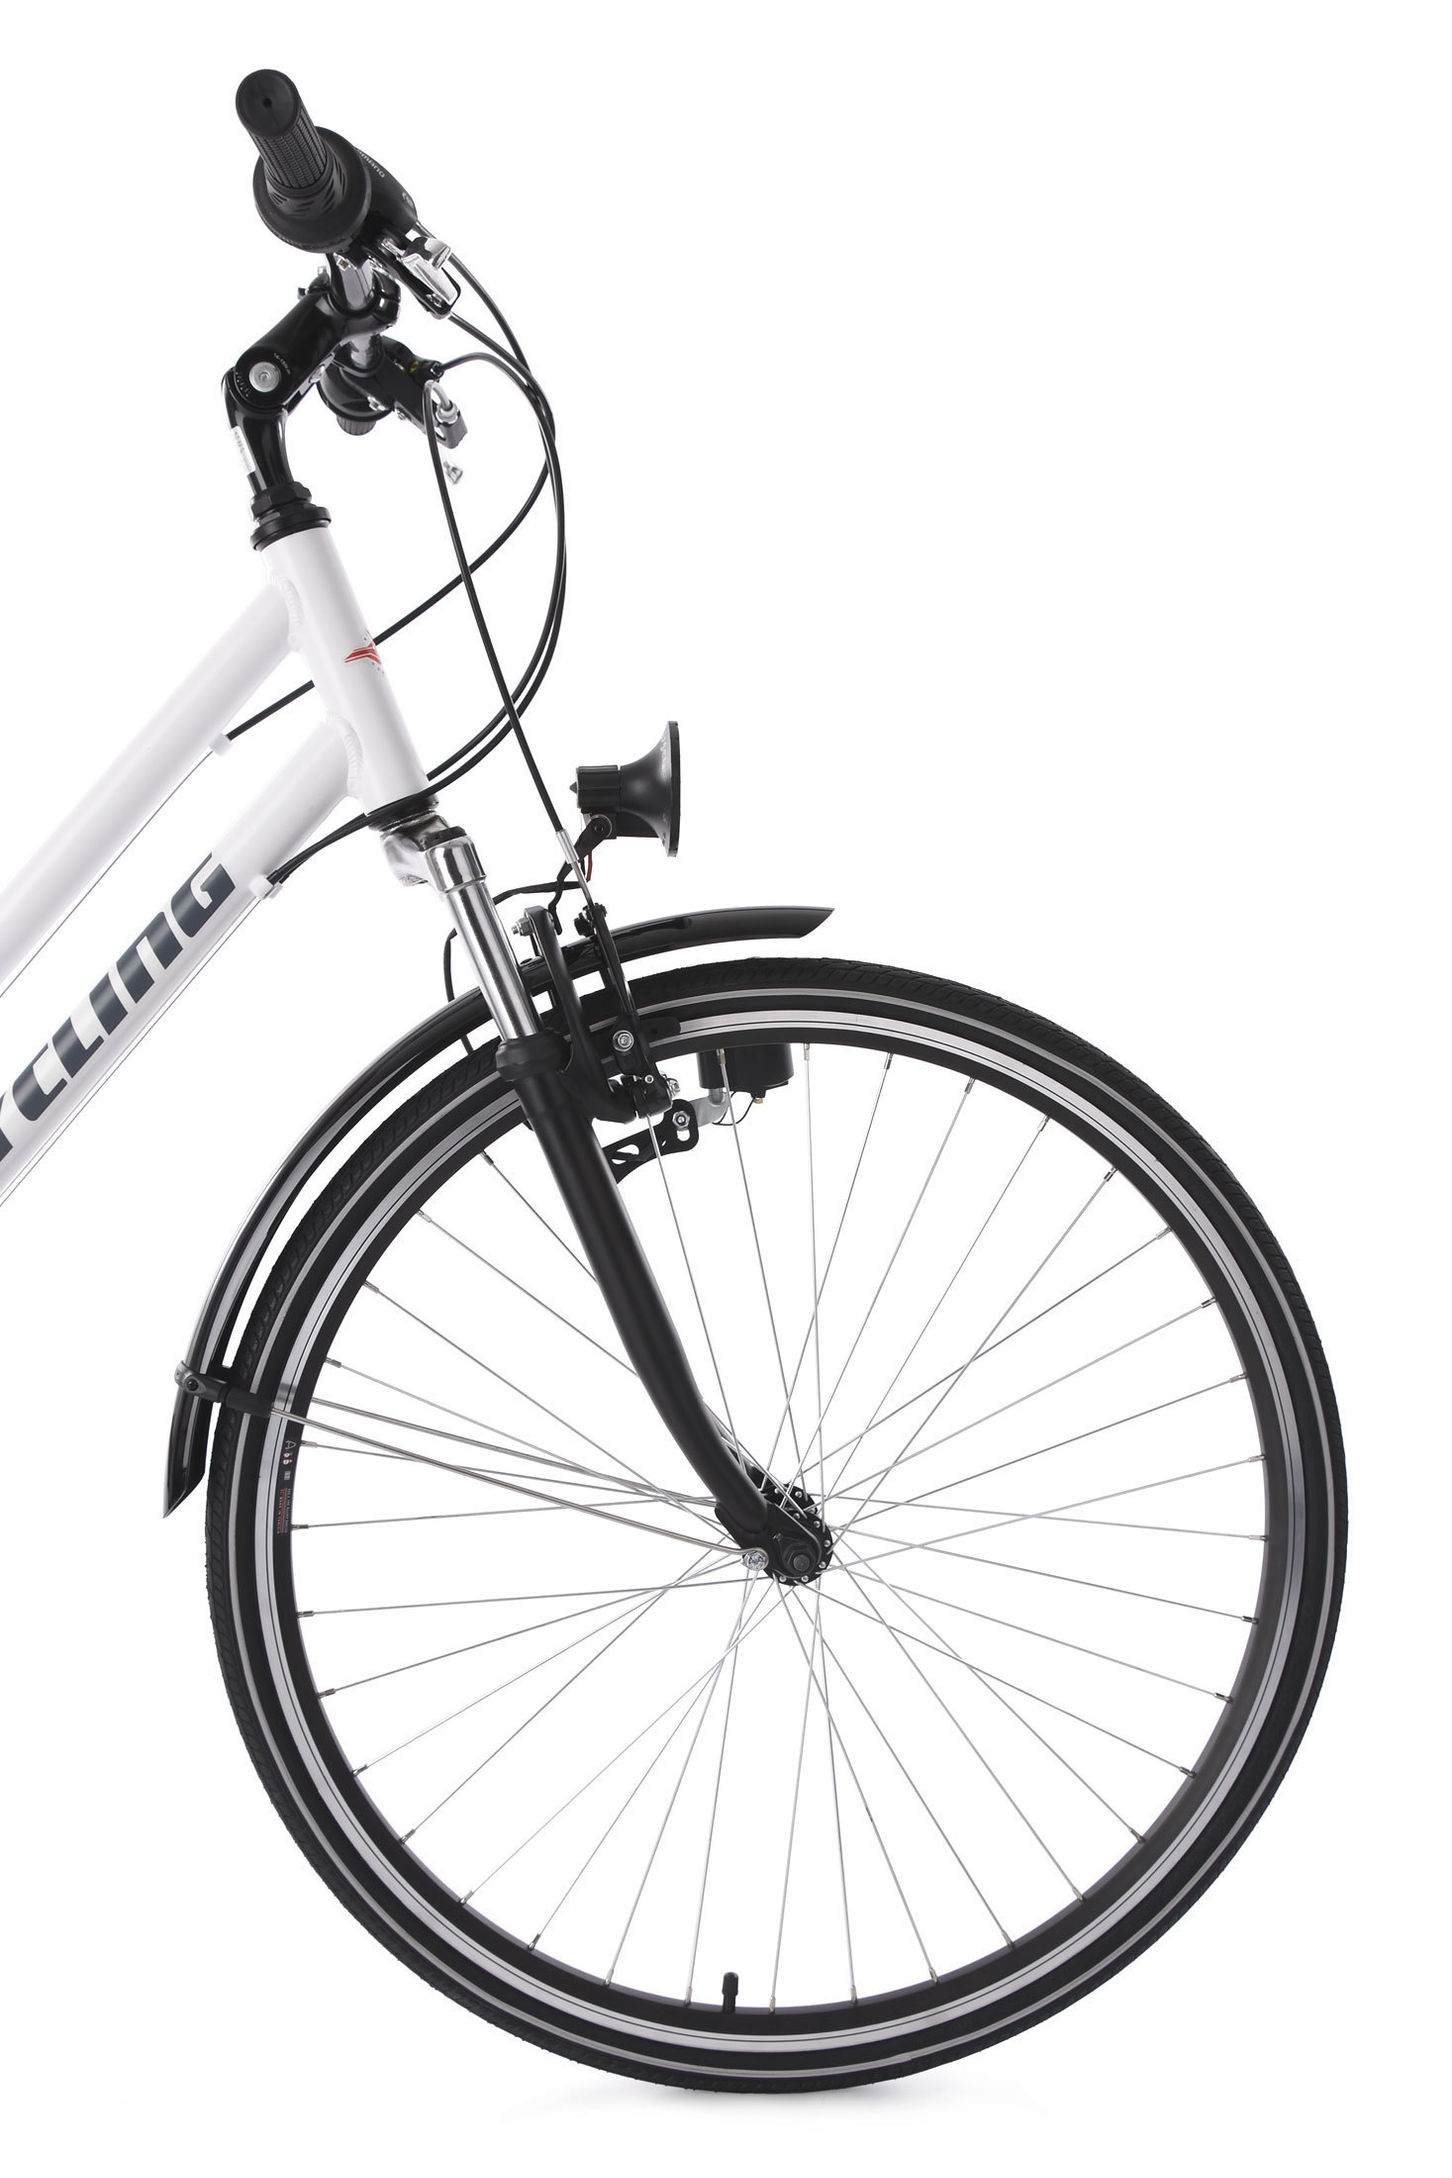 KS Cycling 28 Zoll Trekkingrad Damenfahrrad Metropolis 21 Gänge weiß Größe:  48 cm online kaufen - Orbisana